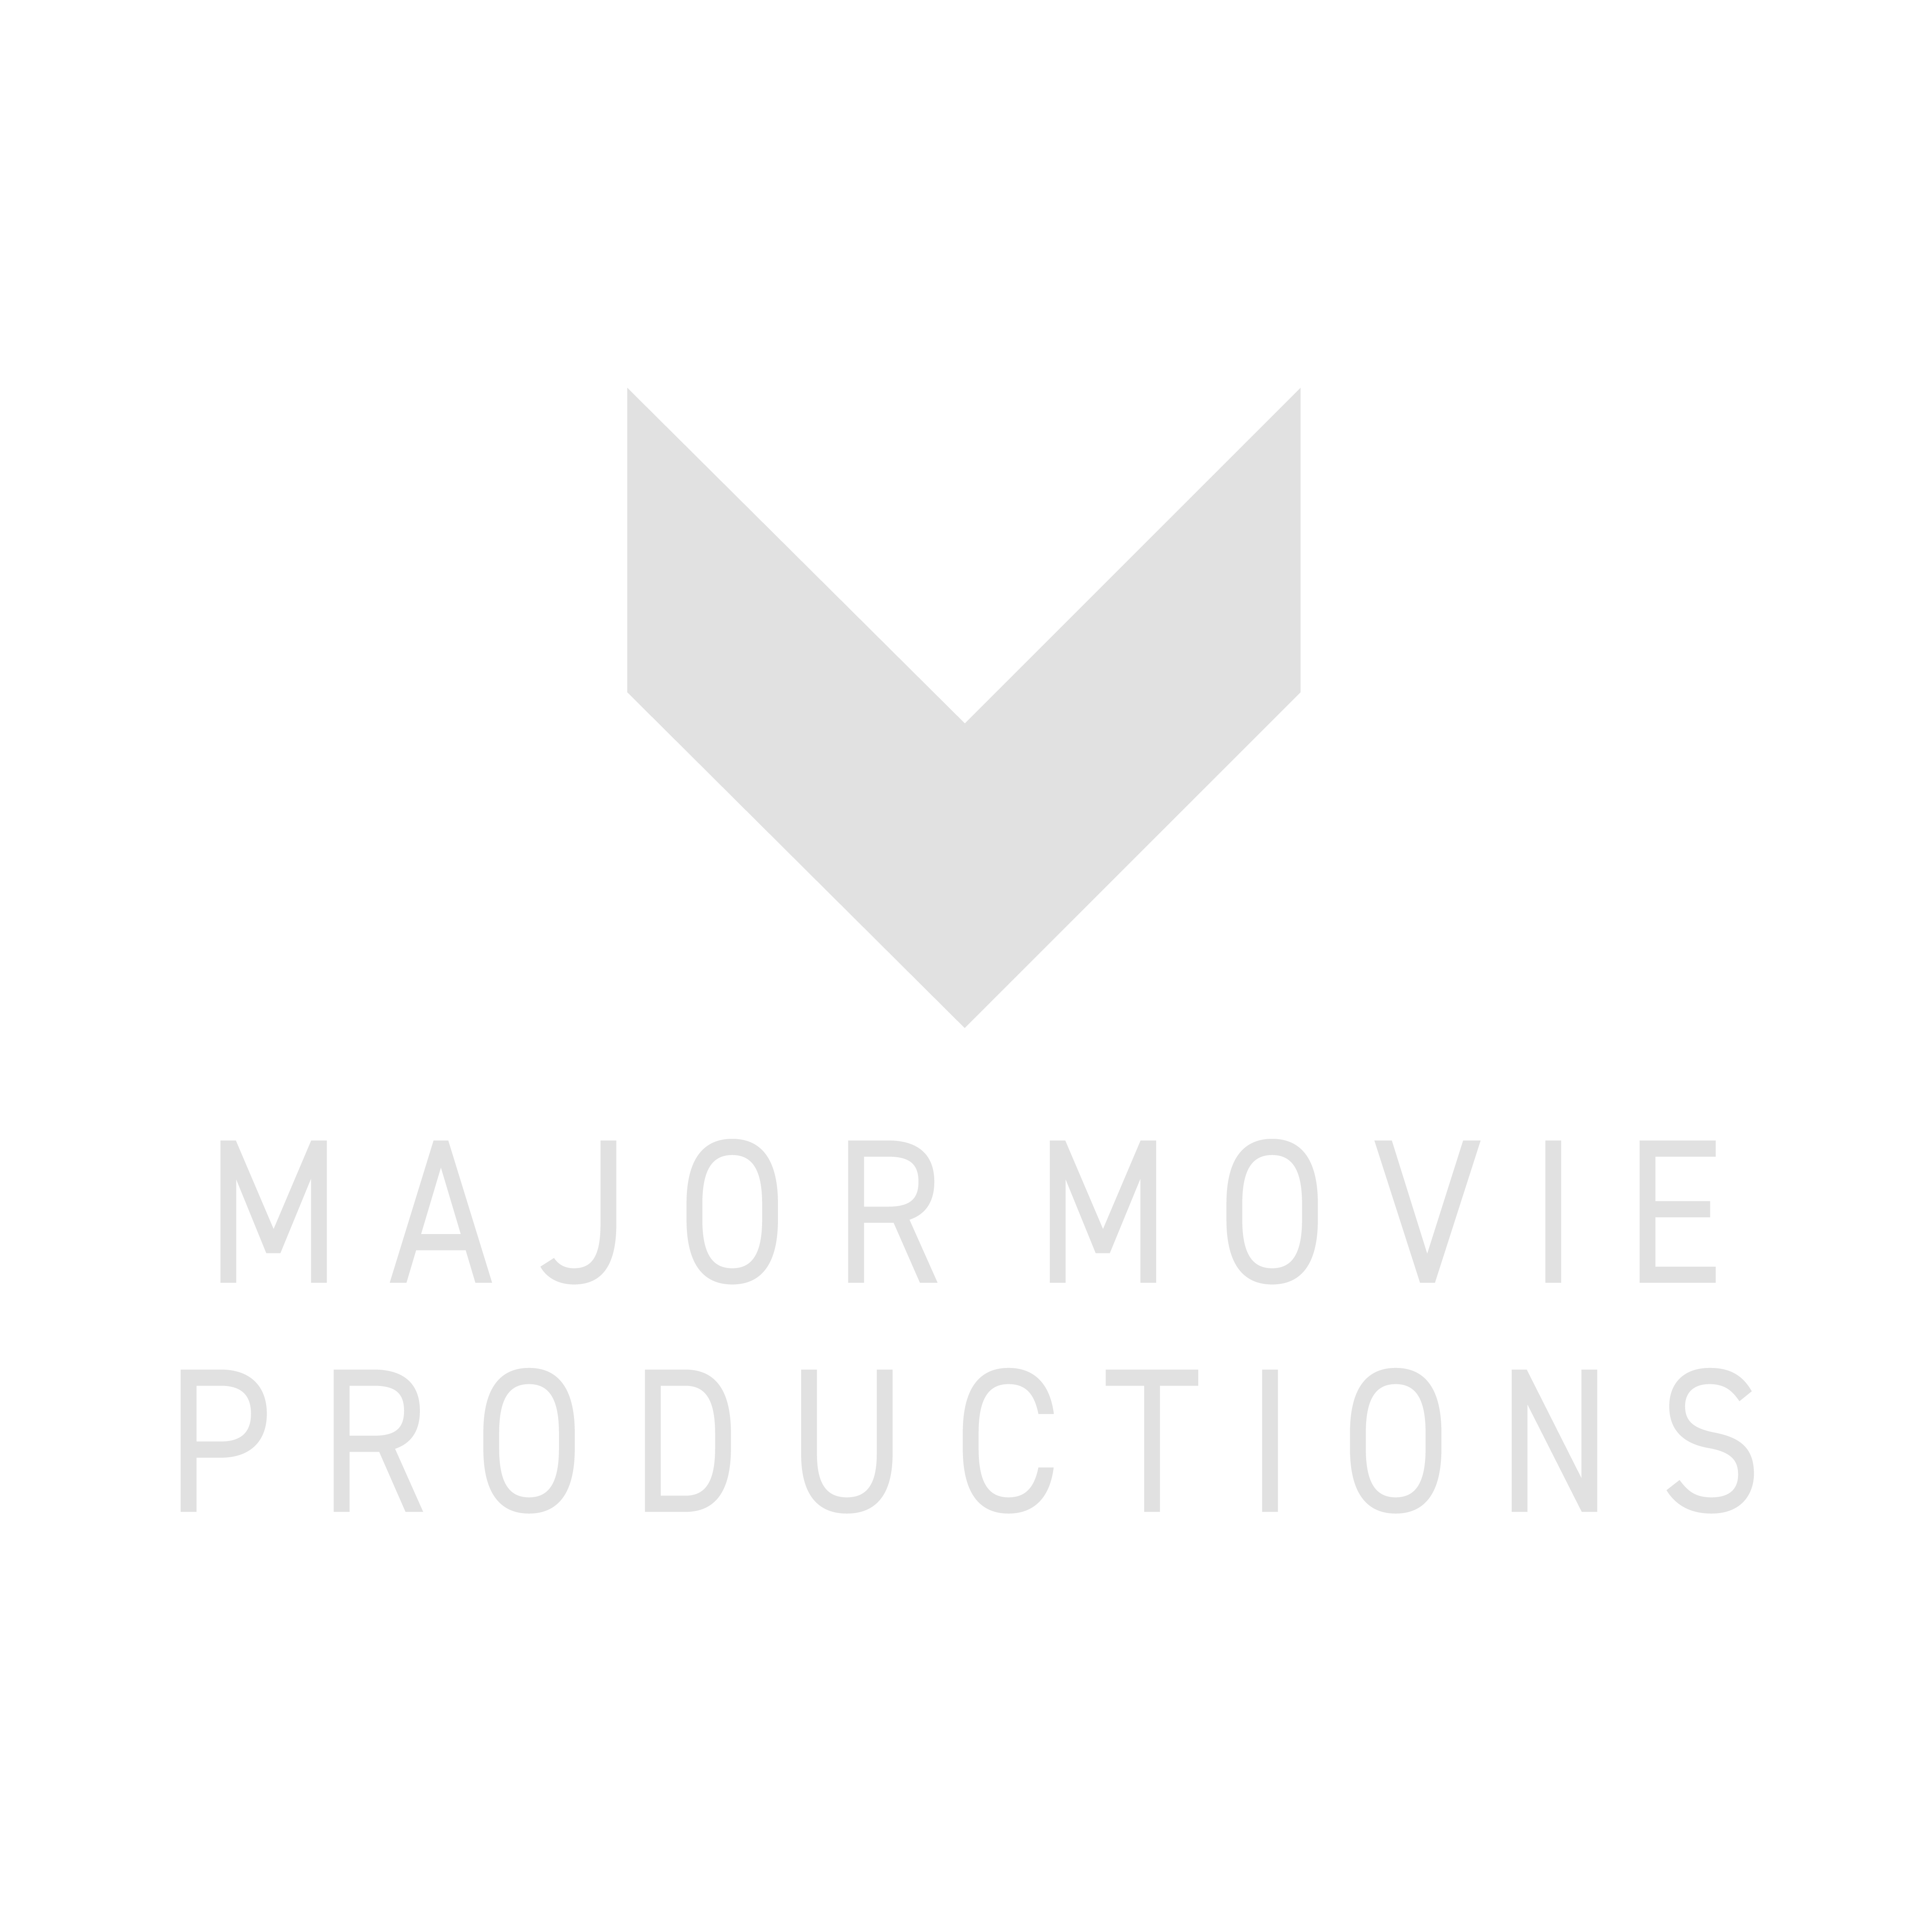 Major Movie Productions